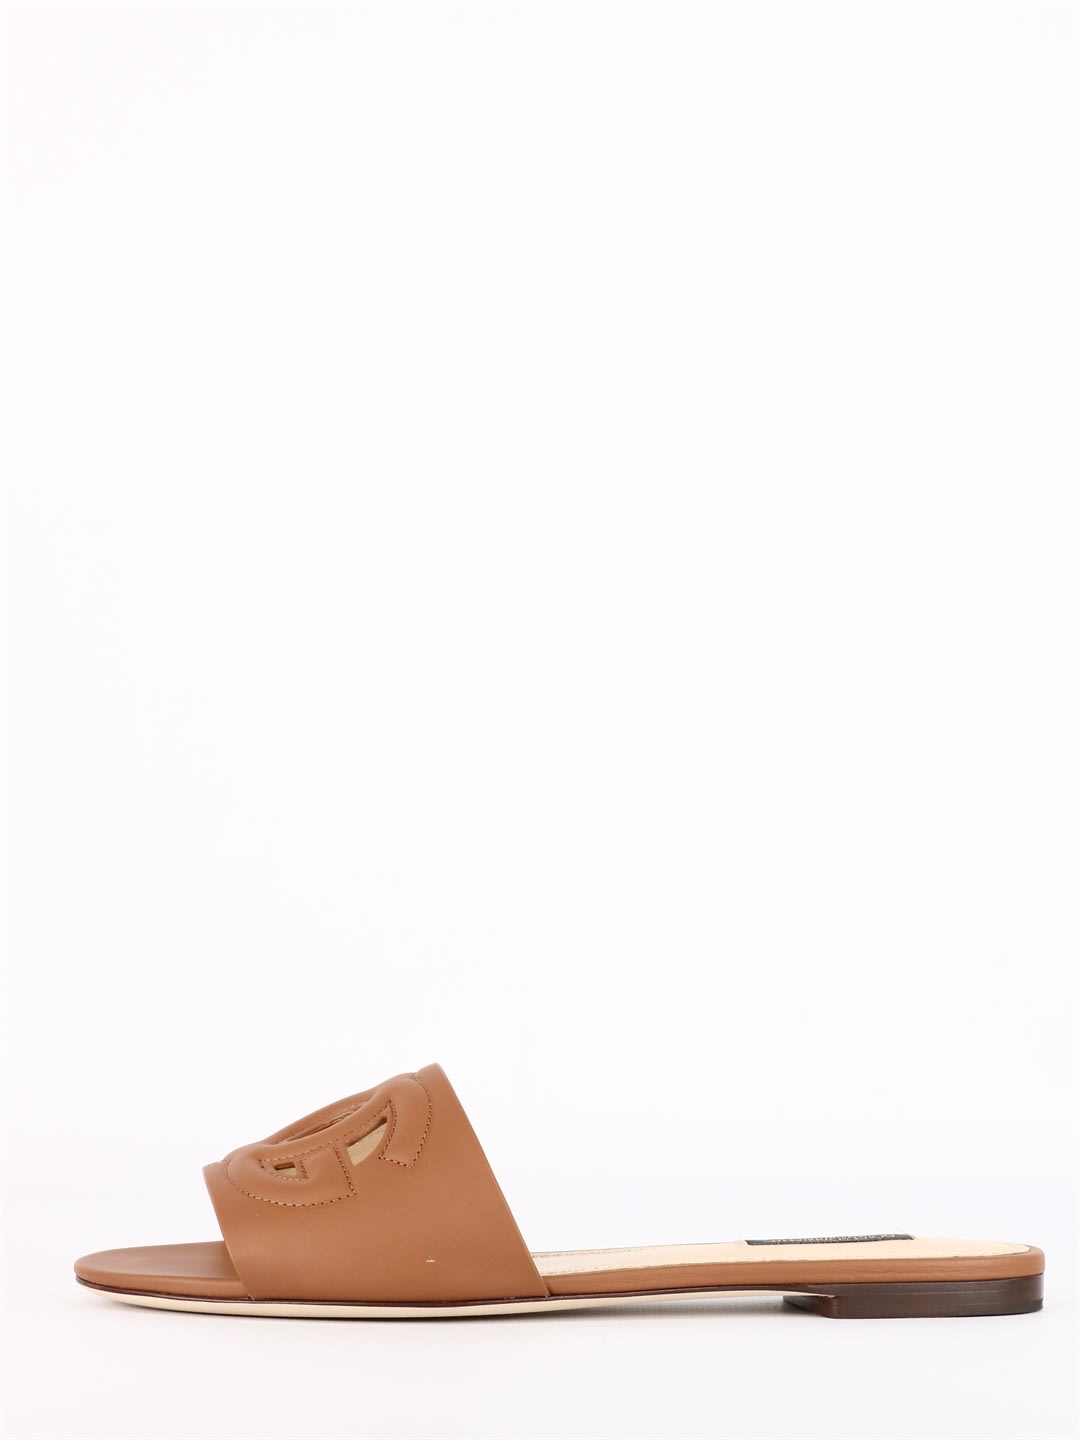 Dolce & Gabbana Dg Millennials Logo Sandal In Brown